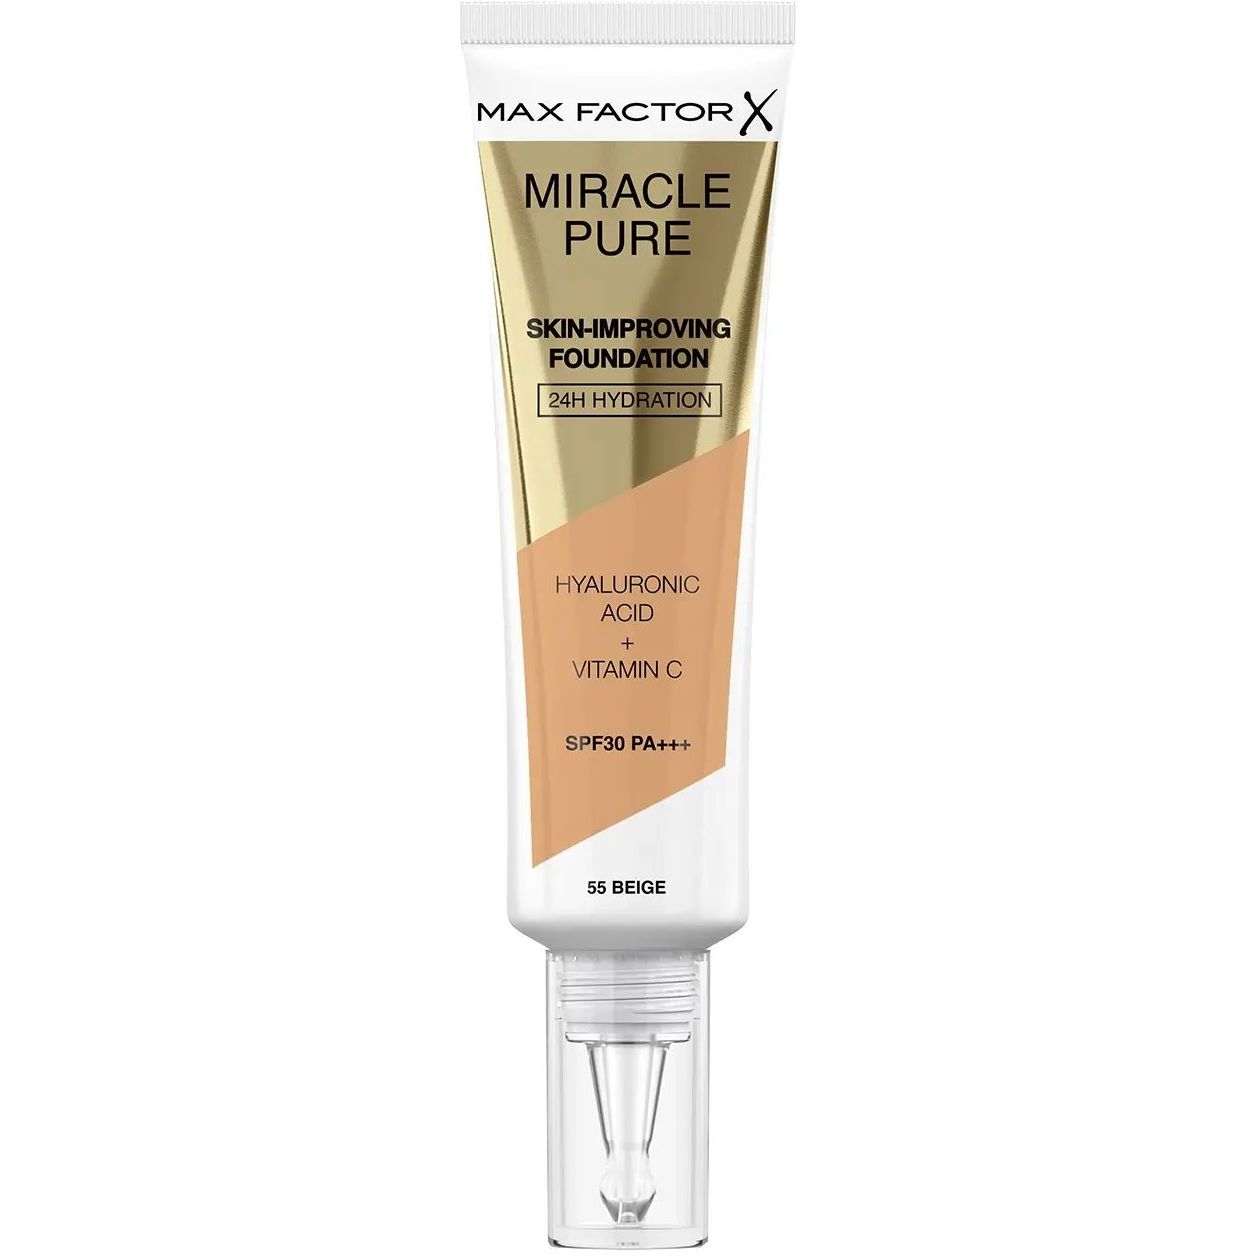 Тональная основа Max Factor Miracle Pure Skin-Improving Foundation SPF30 тон 055 (Beige) 30 мл - фото 1